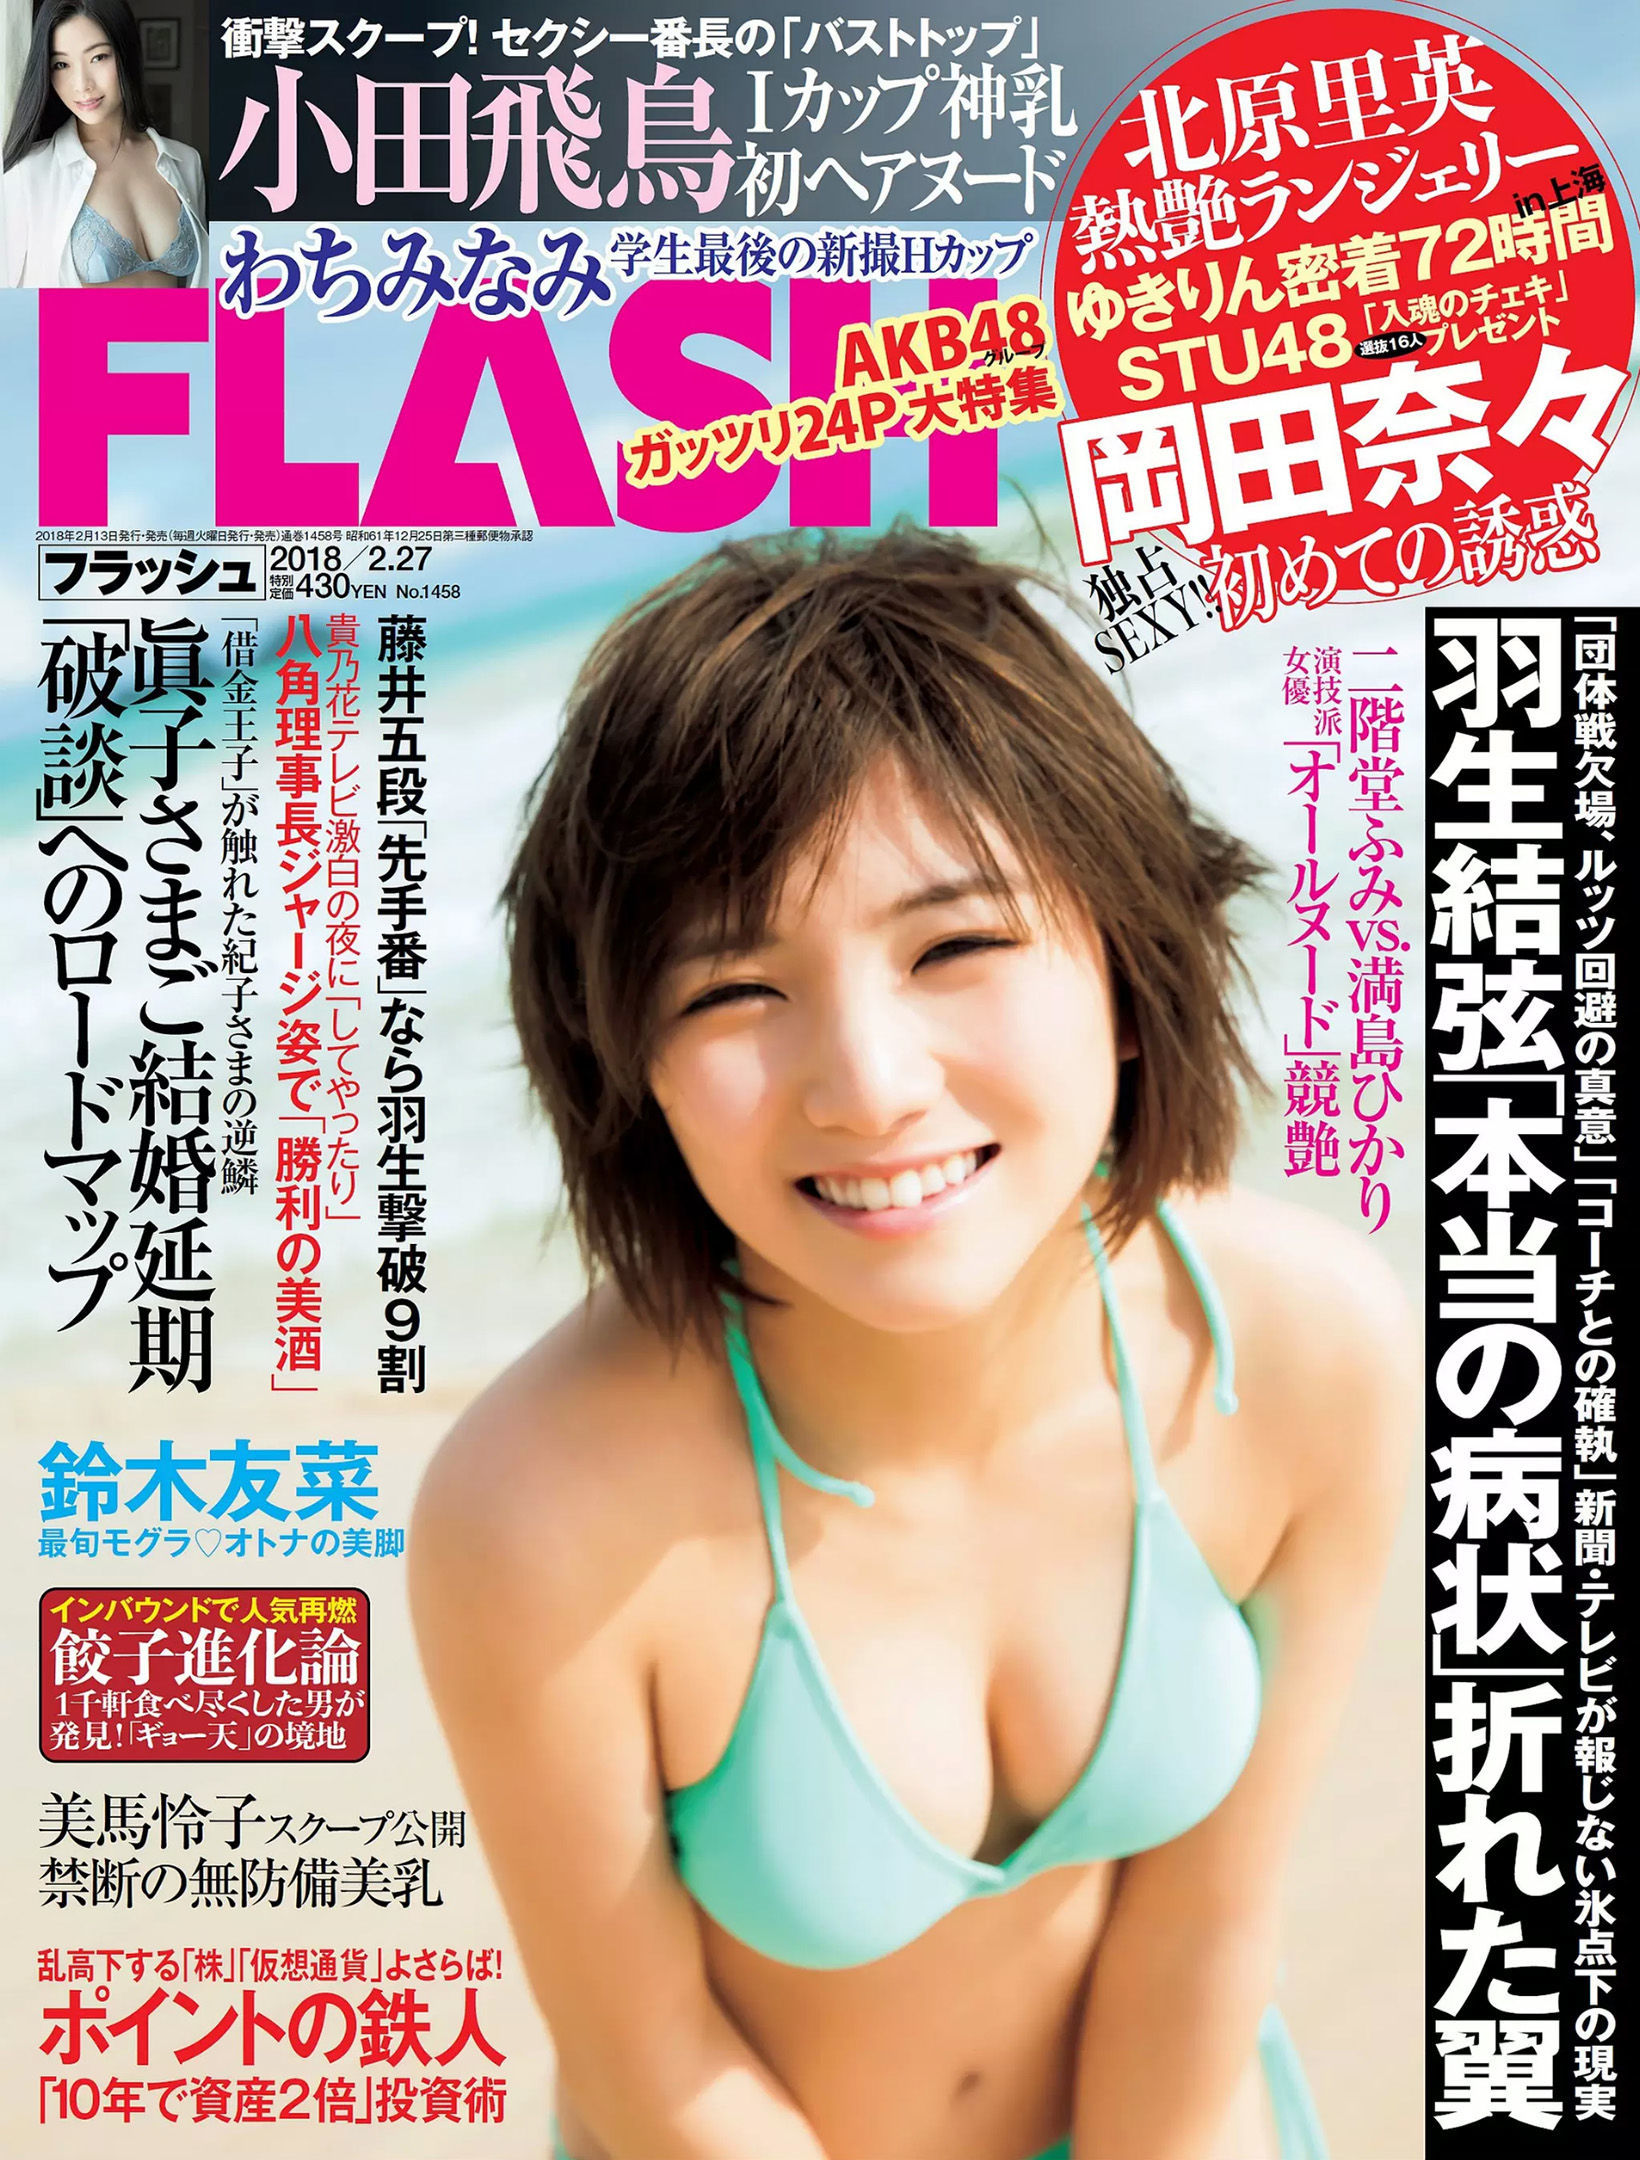 [FLASH]杂志:冈田奈奈高品质绝版网图珍藏版(27P)